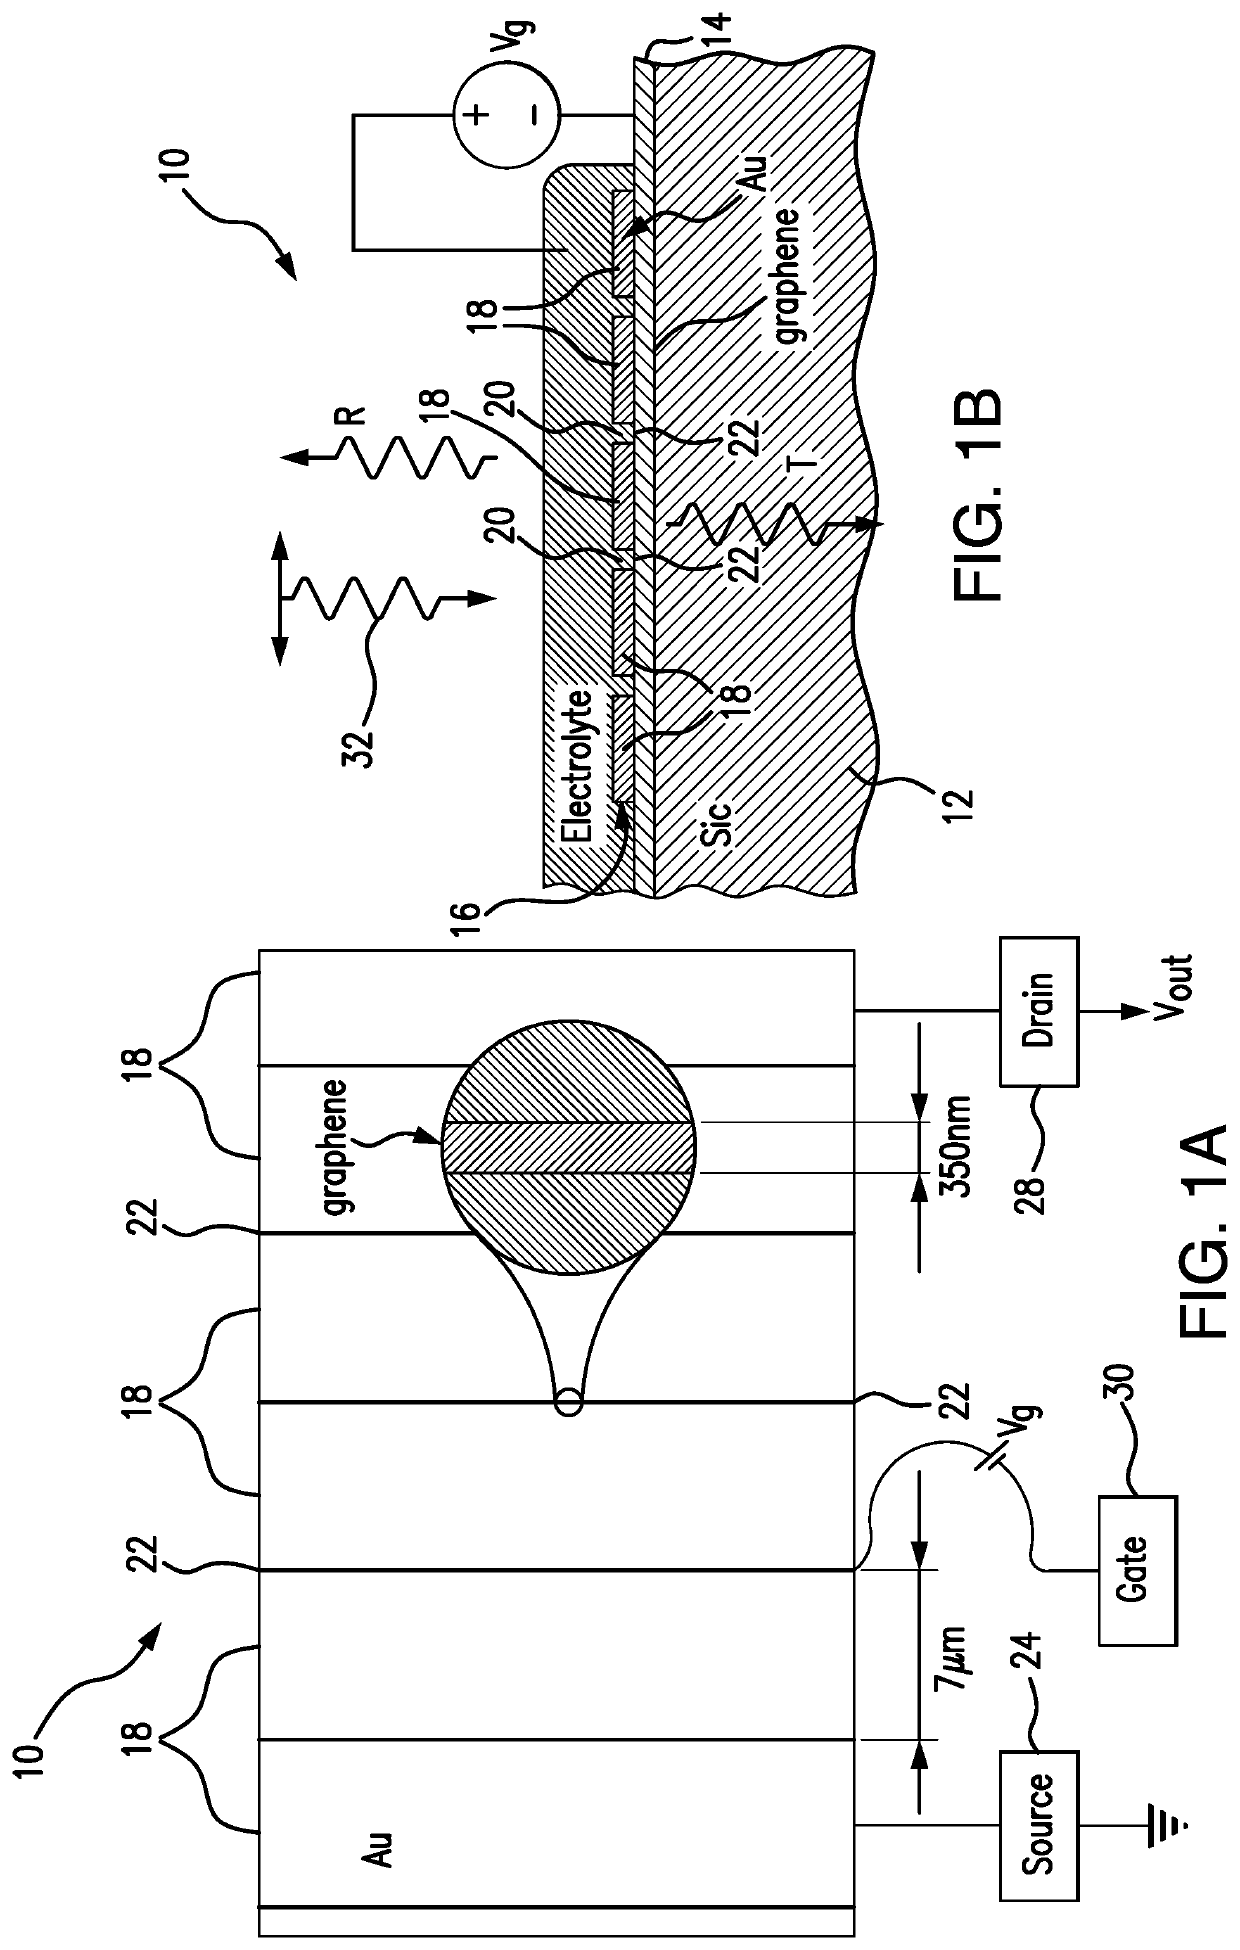 Hybrid metal-graphene terahertz optoelectronic system with tunable plasmonic resonance and method of fabrication